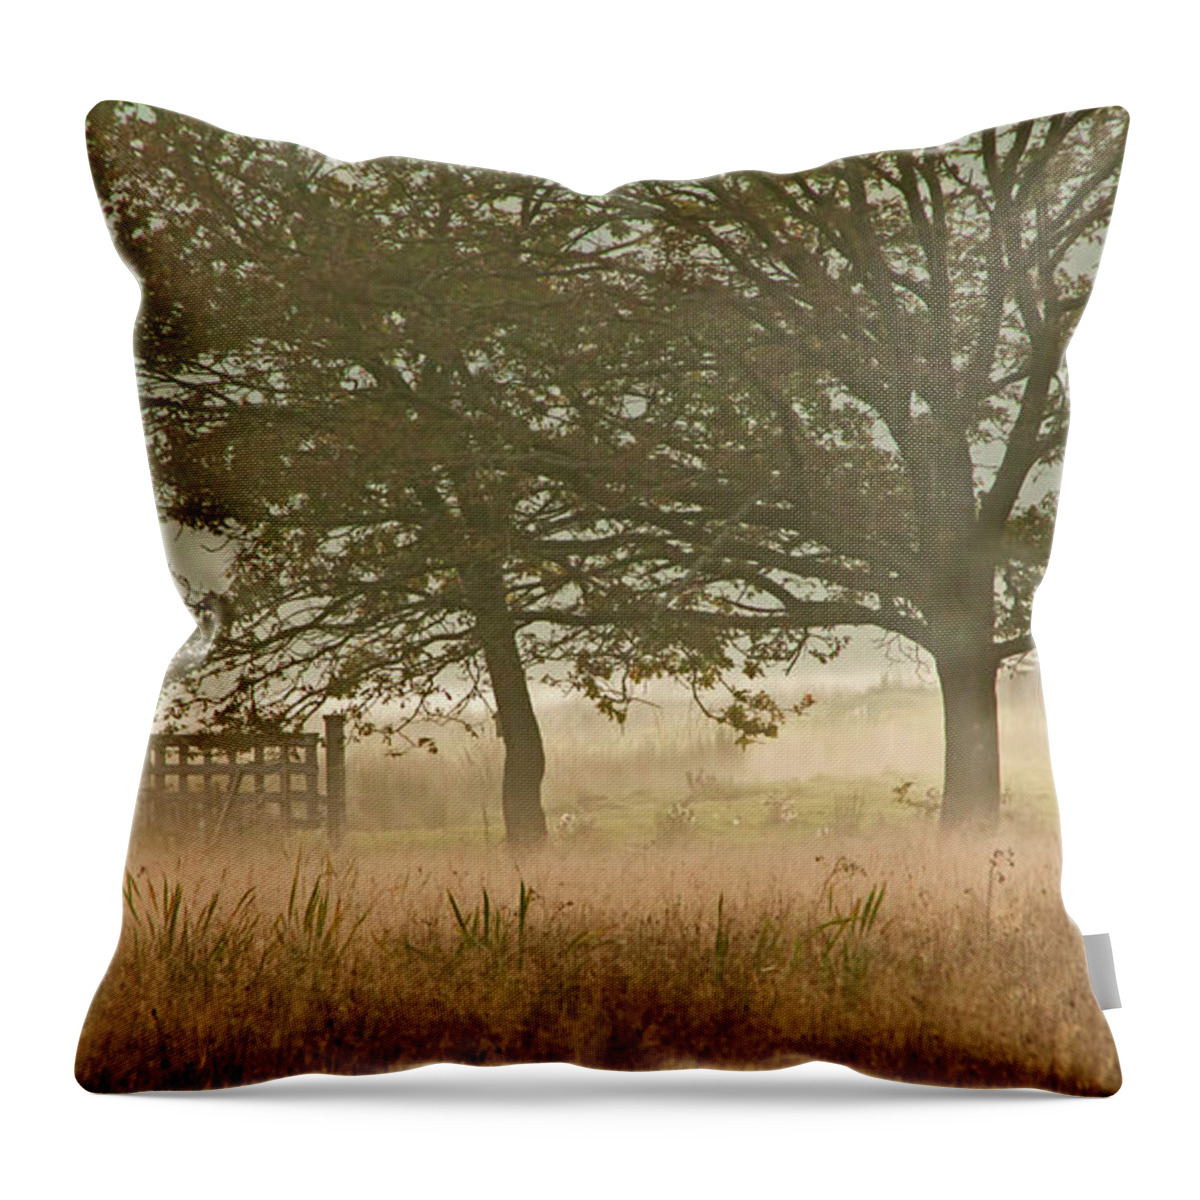 Autumn Mist Throw Pillow featuring the photograph Evening Mist - 365-192 by Inge Riis McDonald